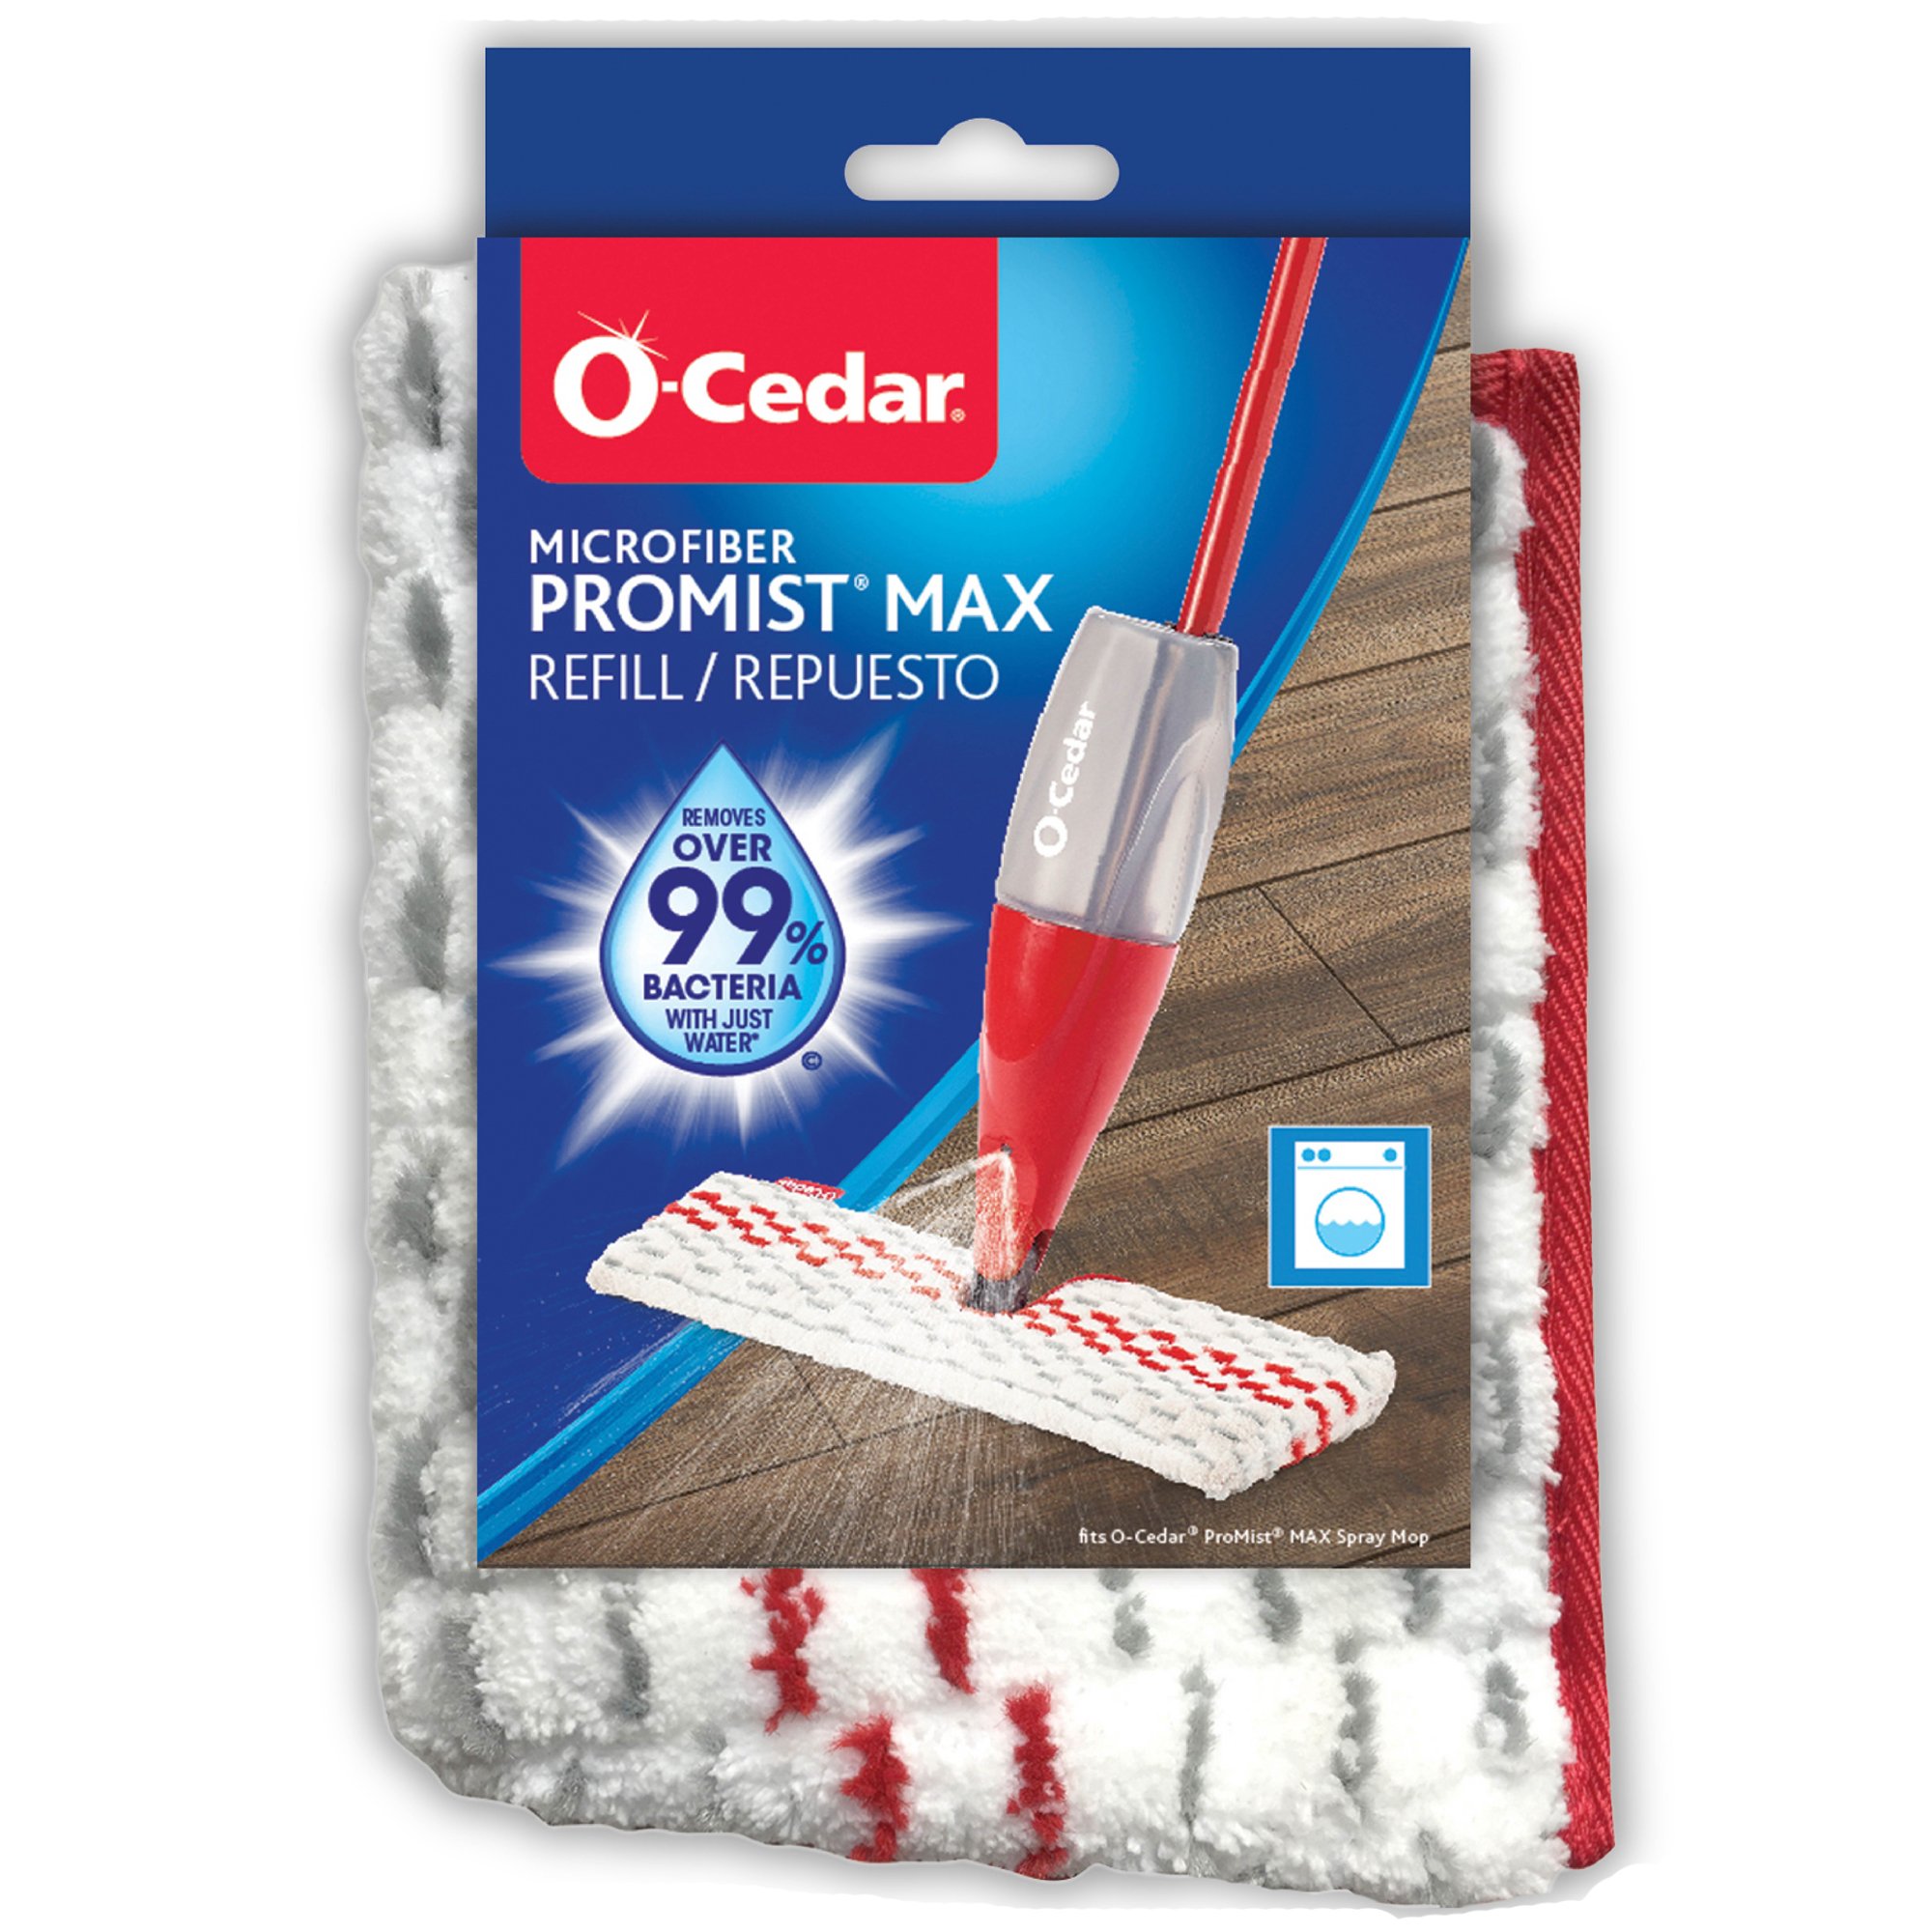 O-Cedar ProMist Max Spray Mop w/ Refills Only $27.80 Shipped on